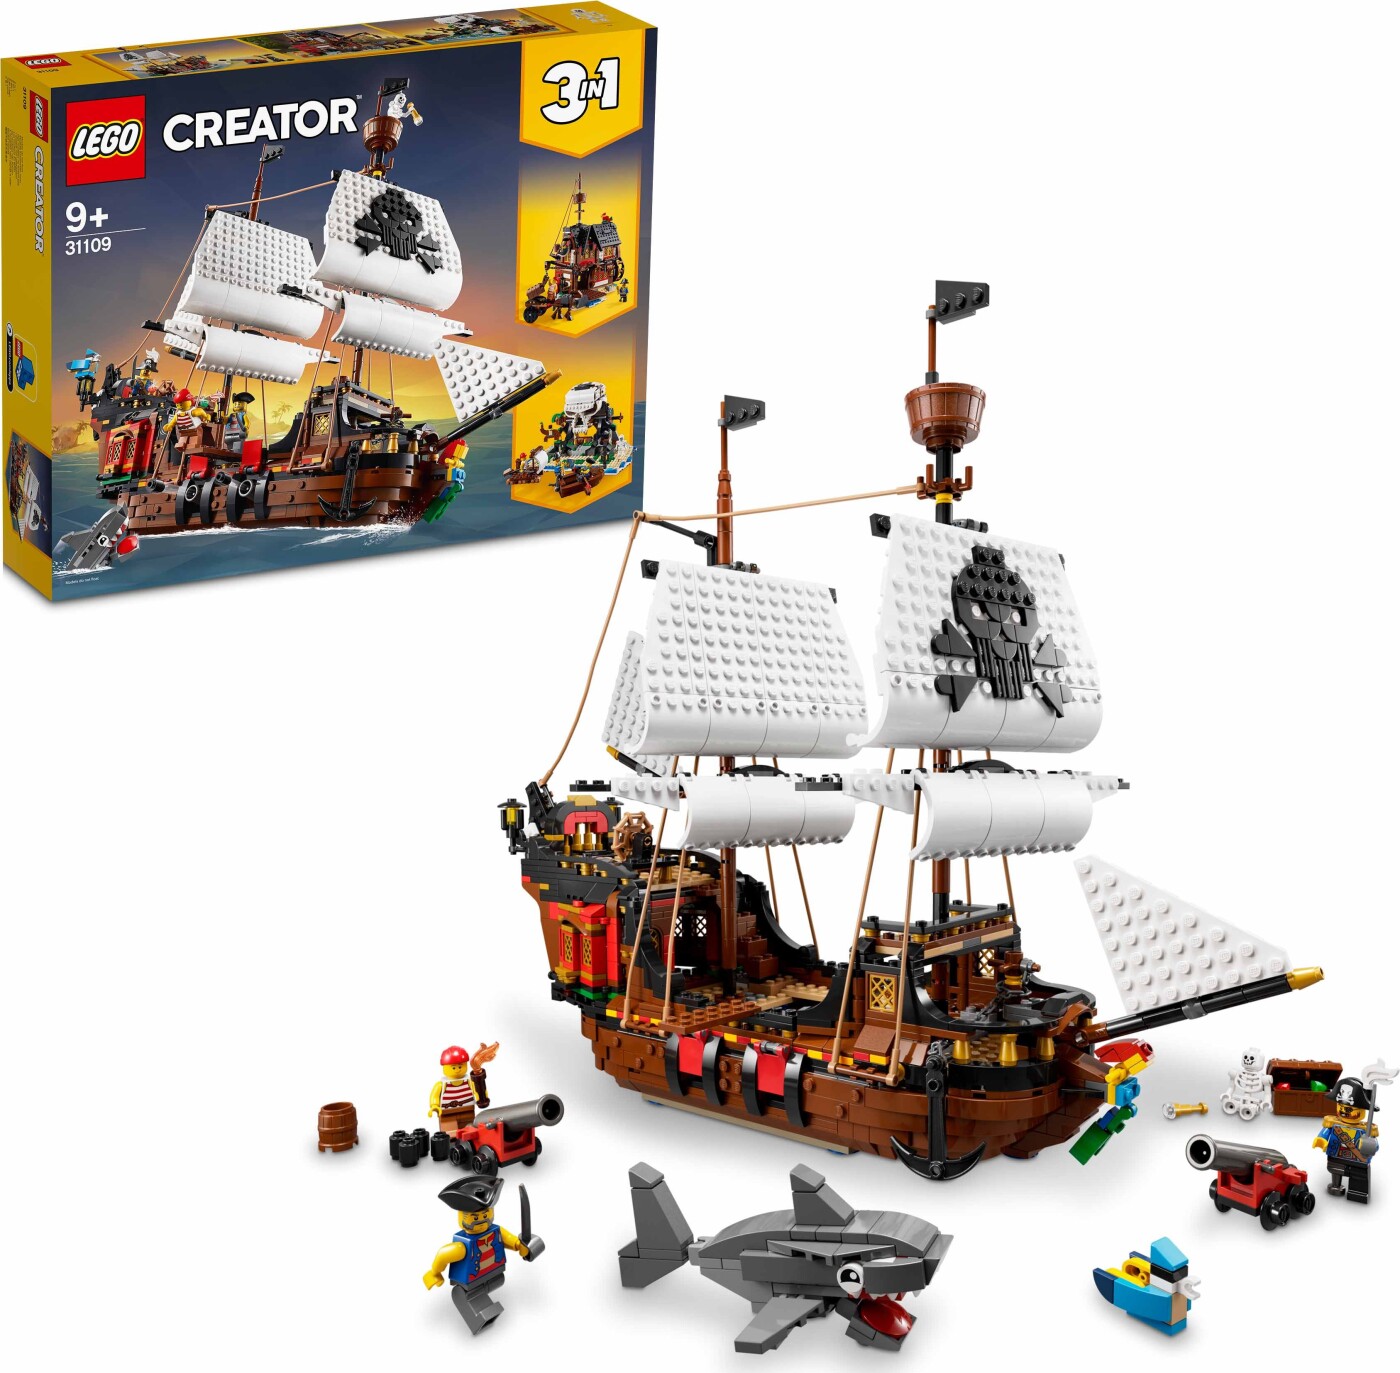 Billede af Lego Creator 3-in-1 - Piratskib - 31109